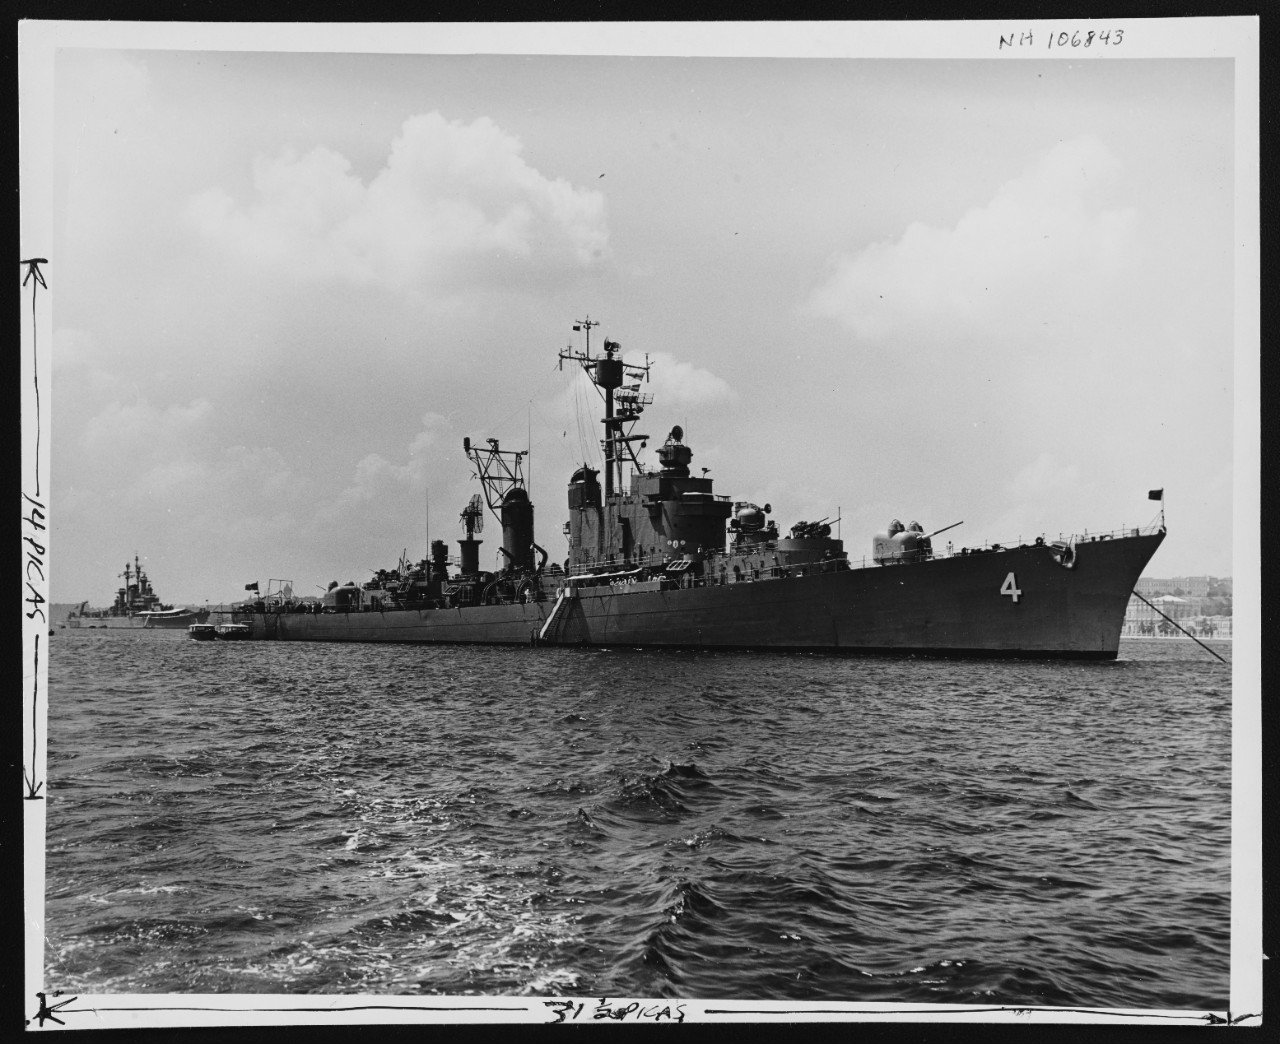 NH 106843  USS Willis A. Lee